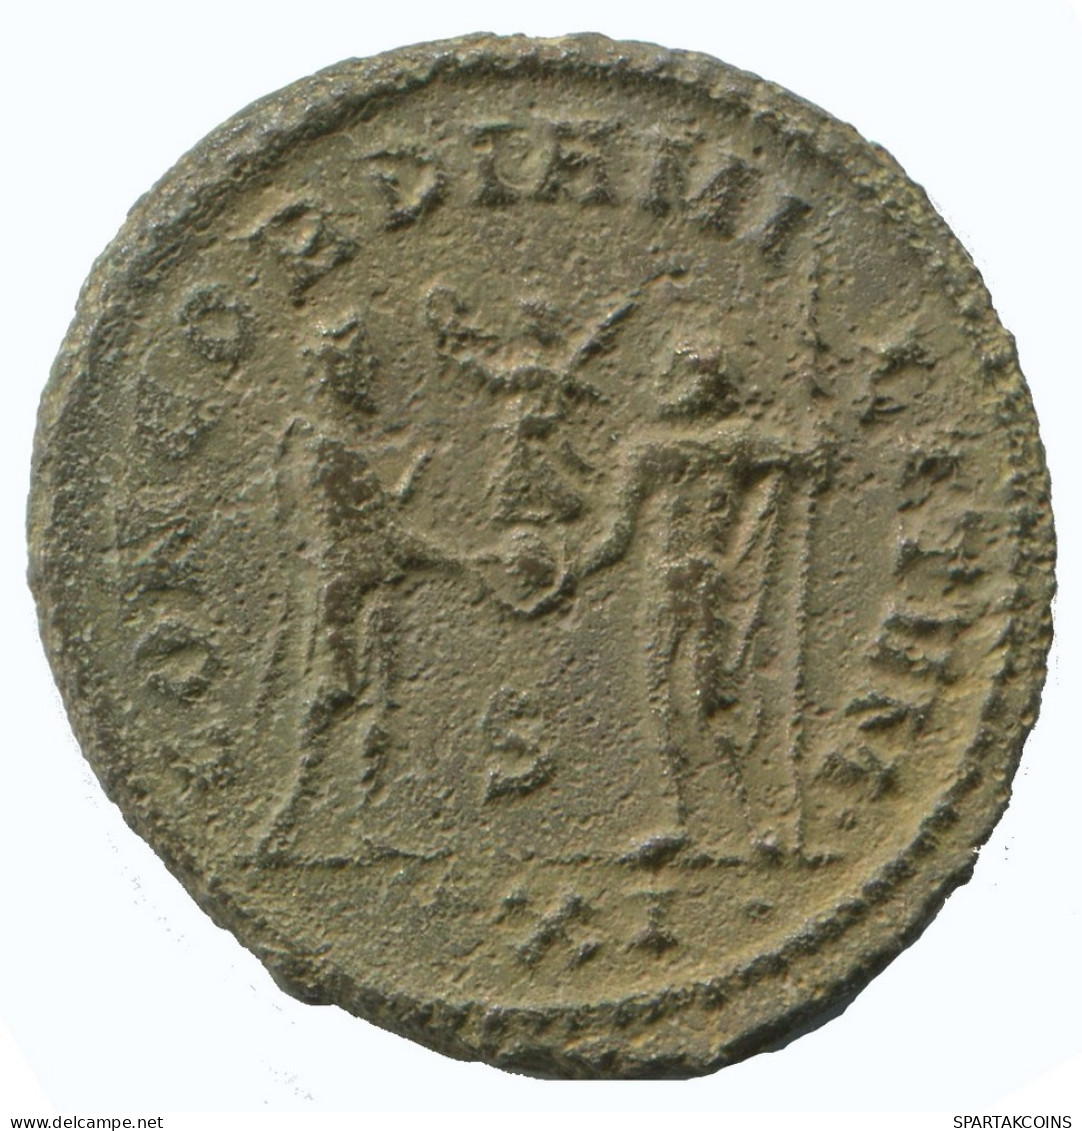 DIOCLETIAN ANTONINIANUS Cyzicus S/xxi AD306 4.4g/23mm #NNN1966.18.F.A - La Tetrarchia E Costantino I Il Grande (284 / 307)